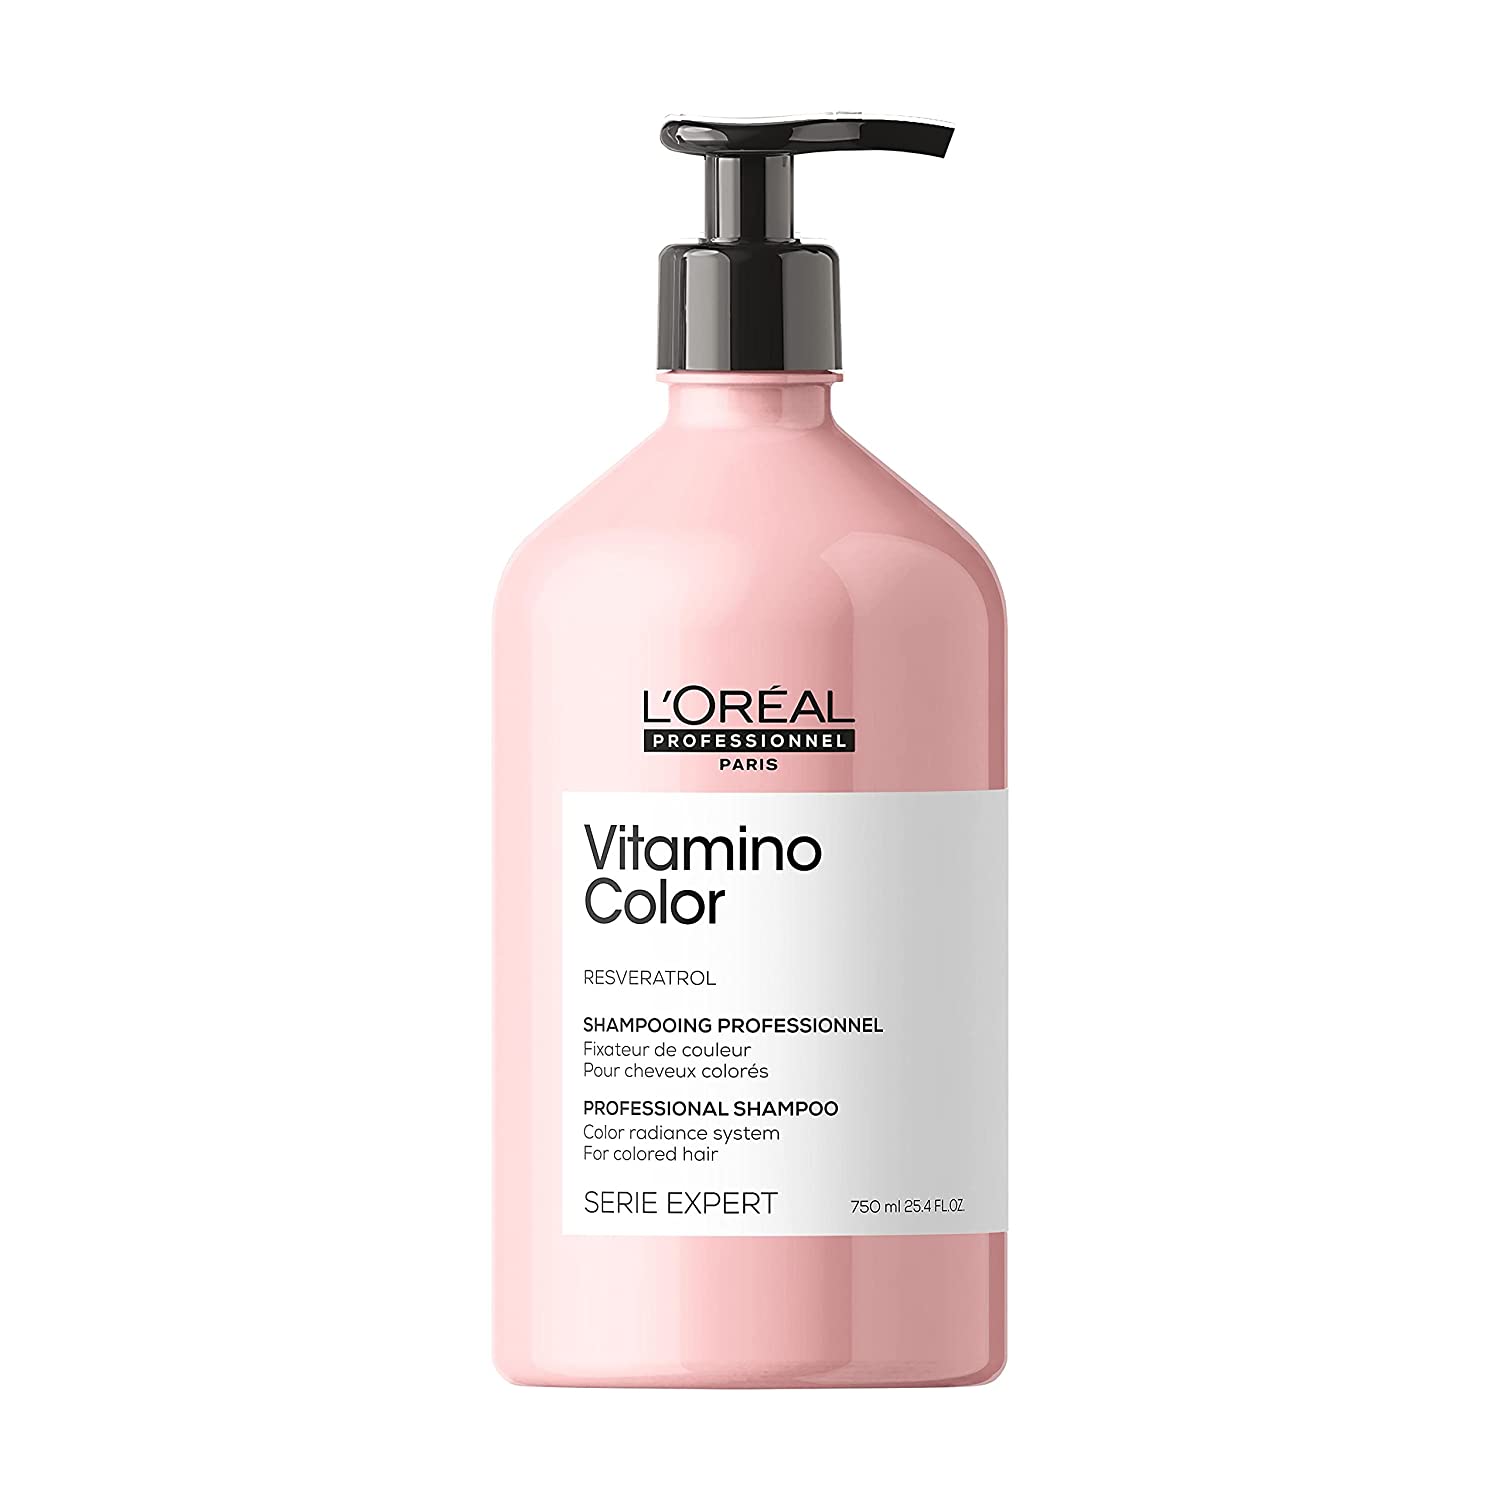 L'Oréal Professionnel Colour Serie Expert, Vitamino Color Shampoo, 750 ml